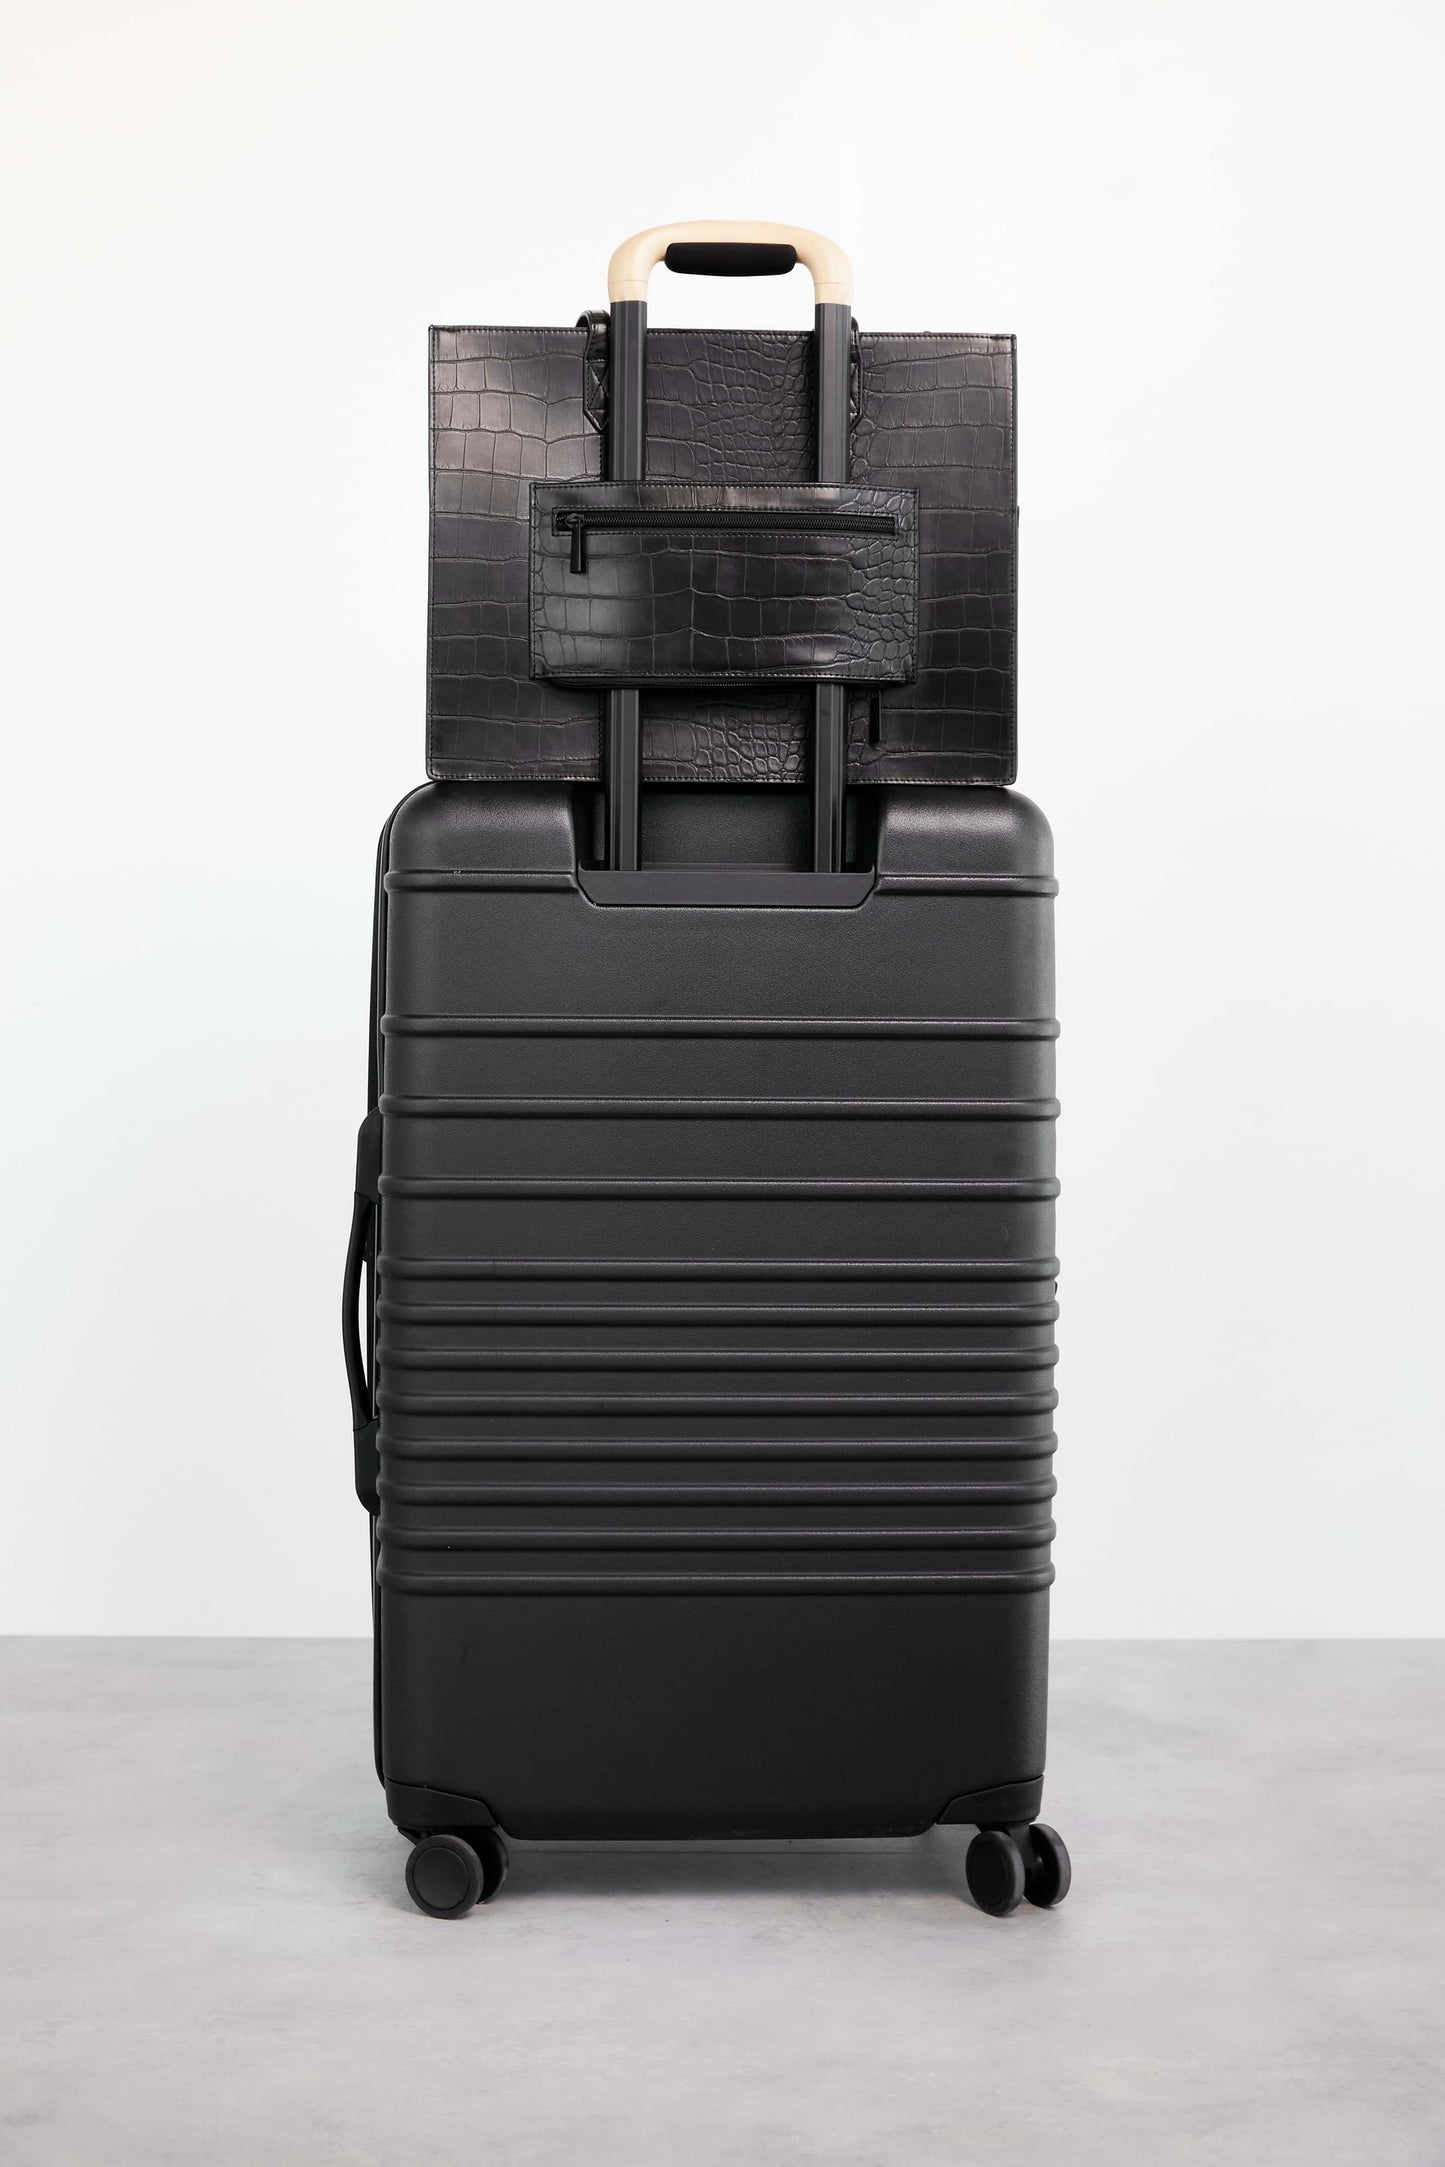 Mini Work Tote in Black Croc Back Trolley Sleeve on top of Black Luggage